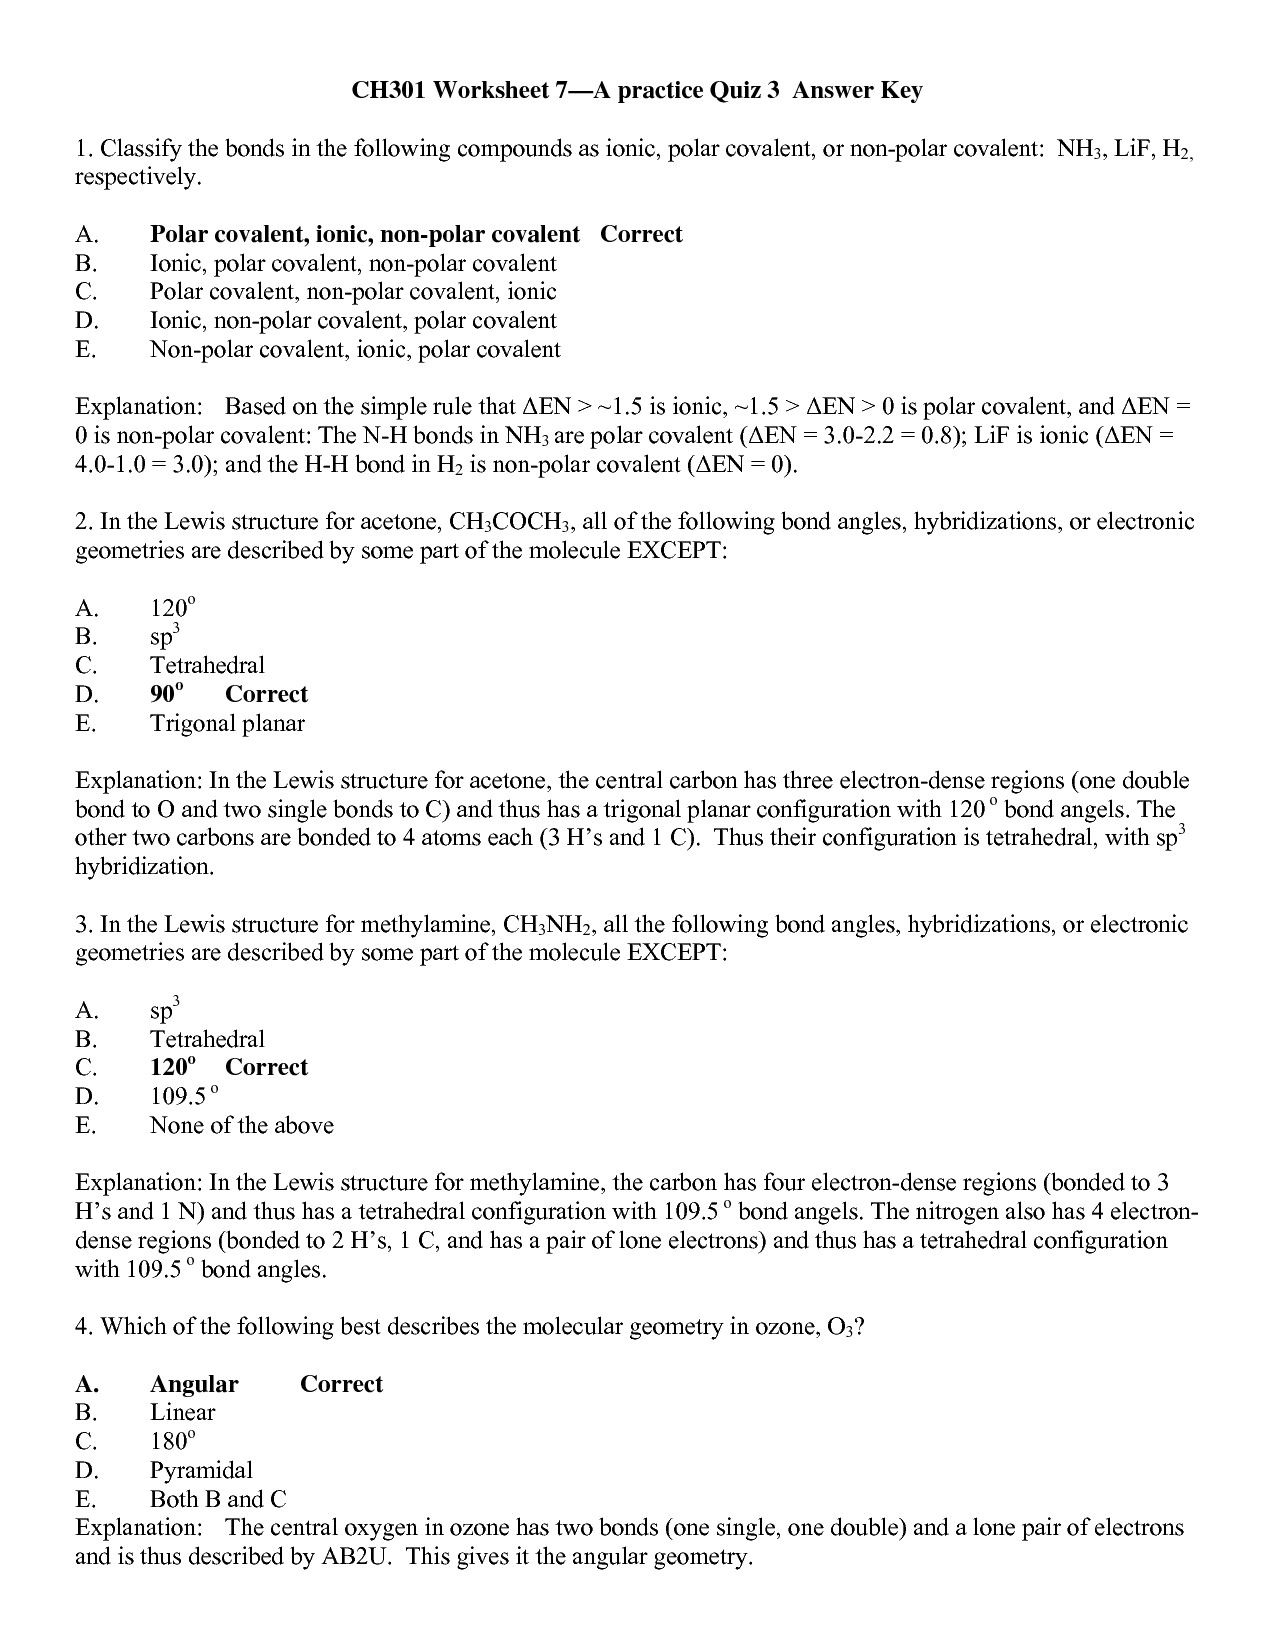 50 Molecular Geometry Worksheet Answers 30